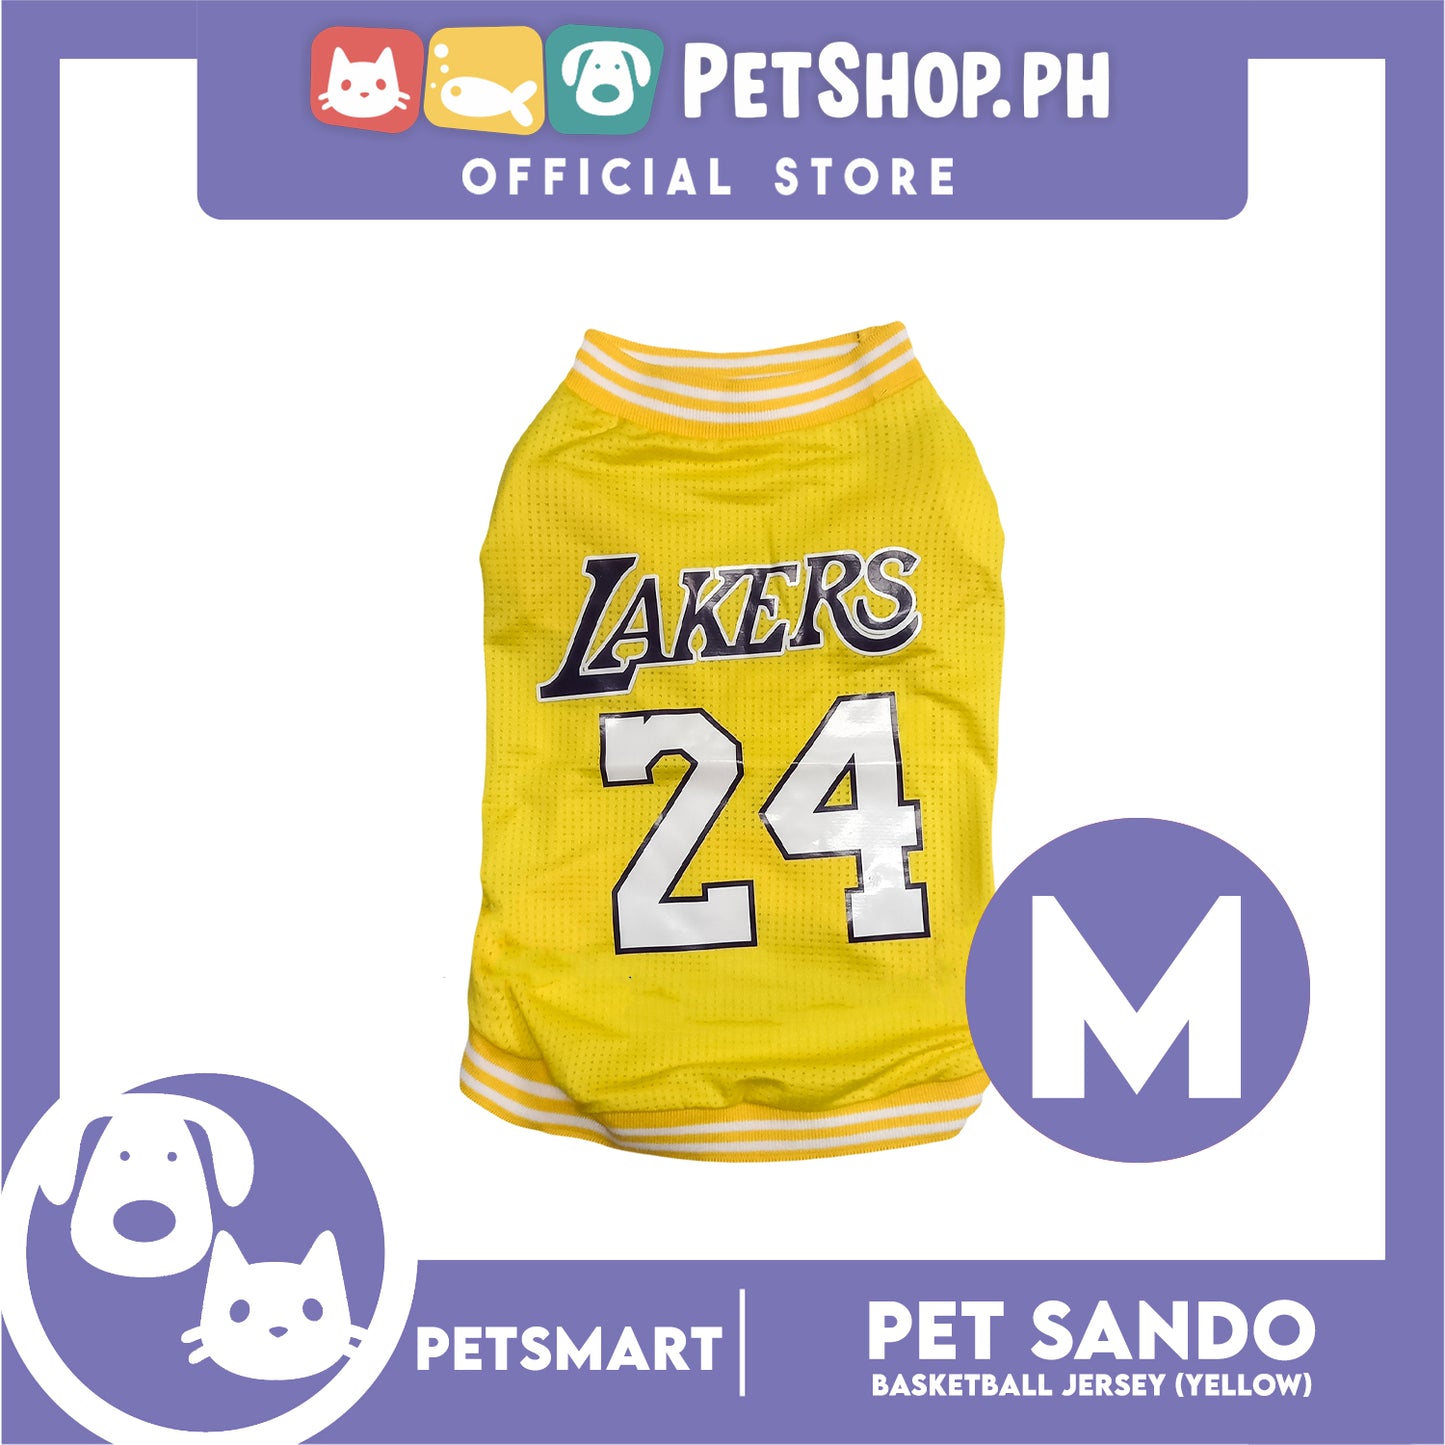 Pet Sando Basketball Jersey Yellow (Medium)